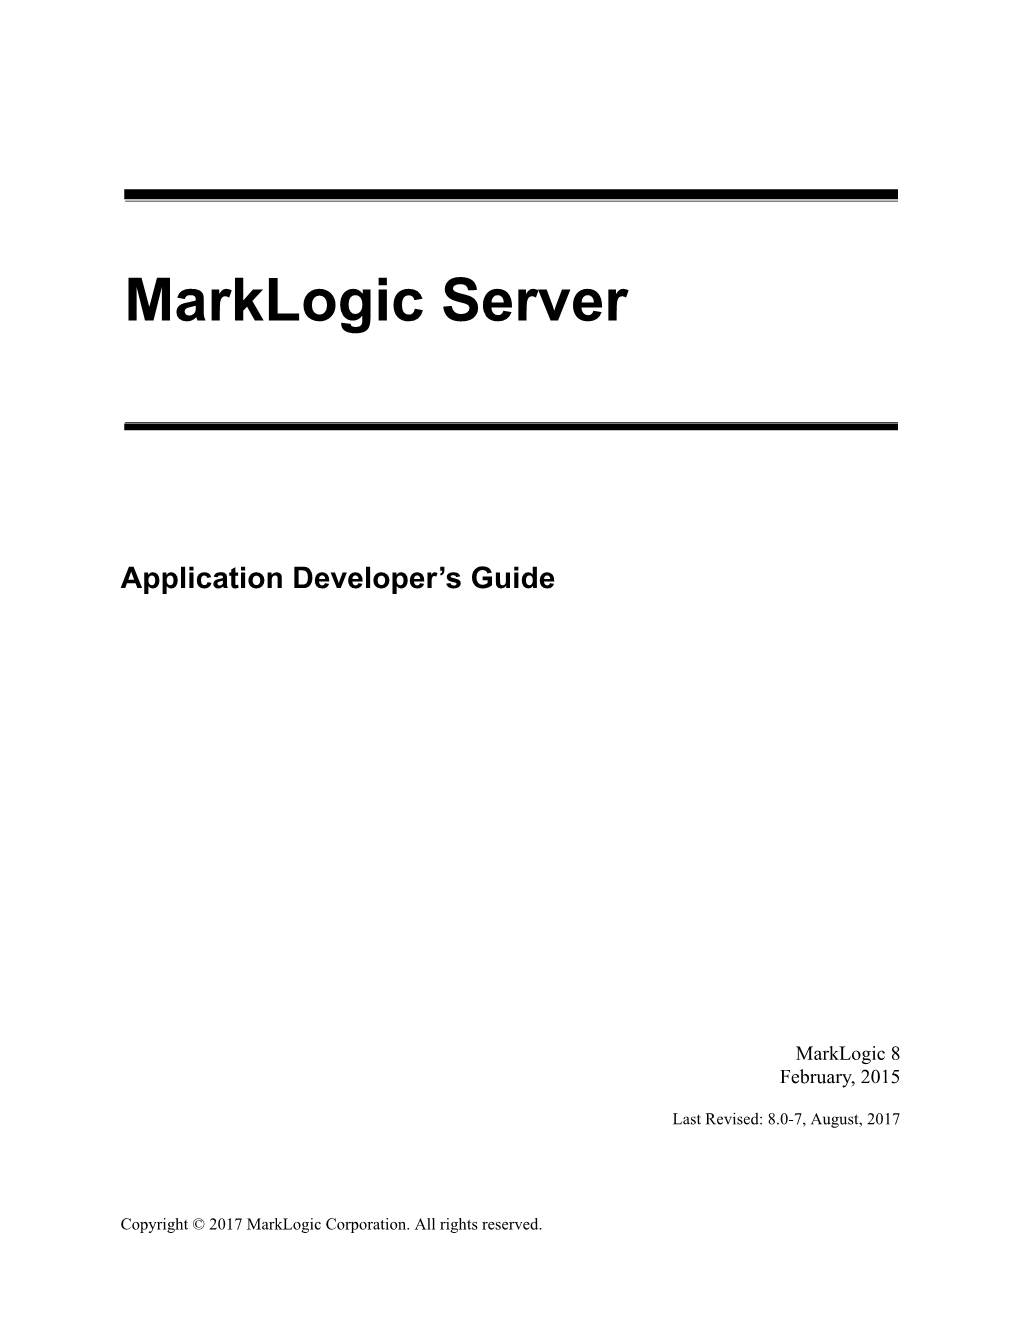 Application Developer's Guide (PDF)